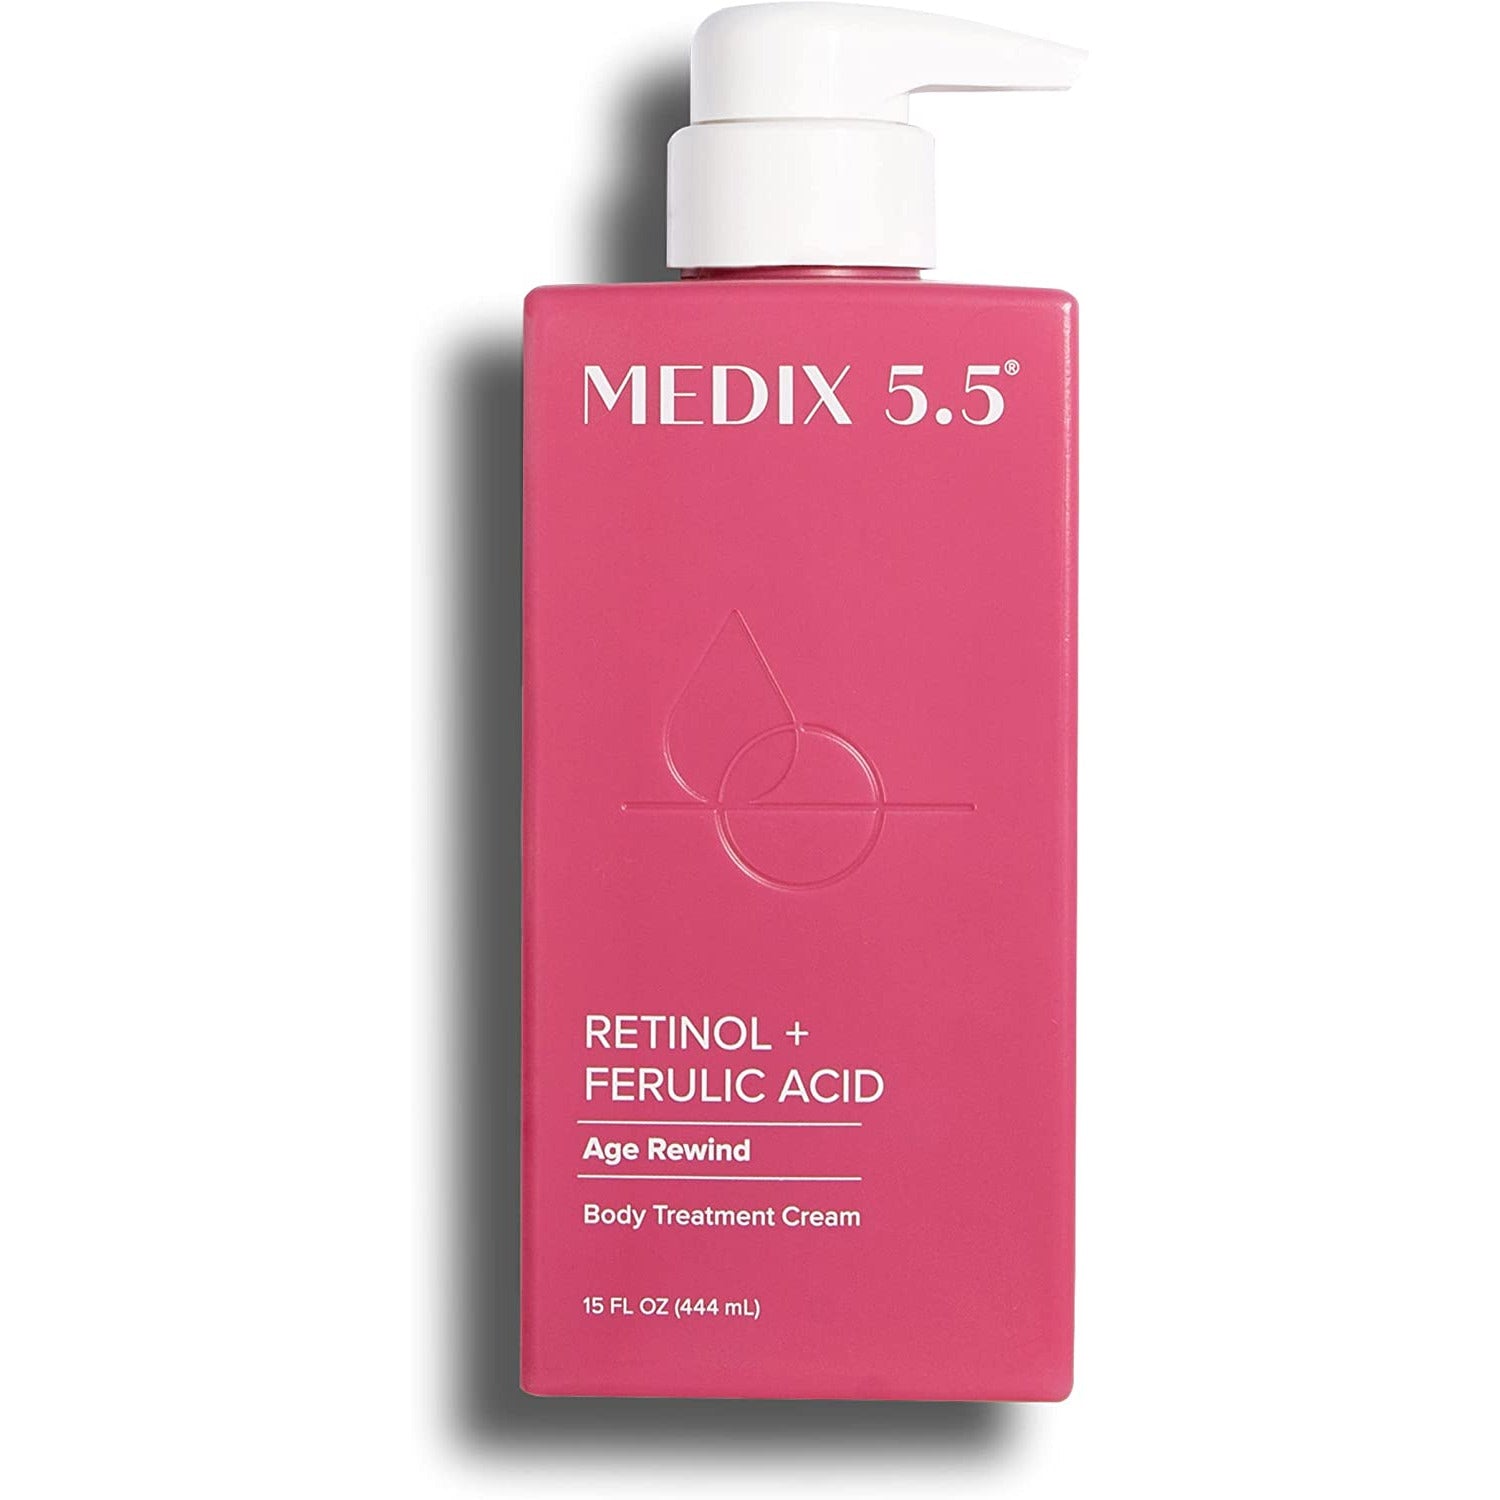 Medix 5.5 Retinol Cream with Ferulic Acid